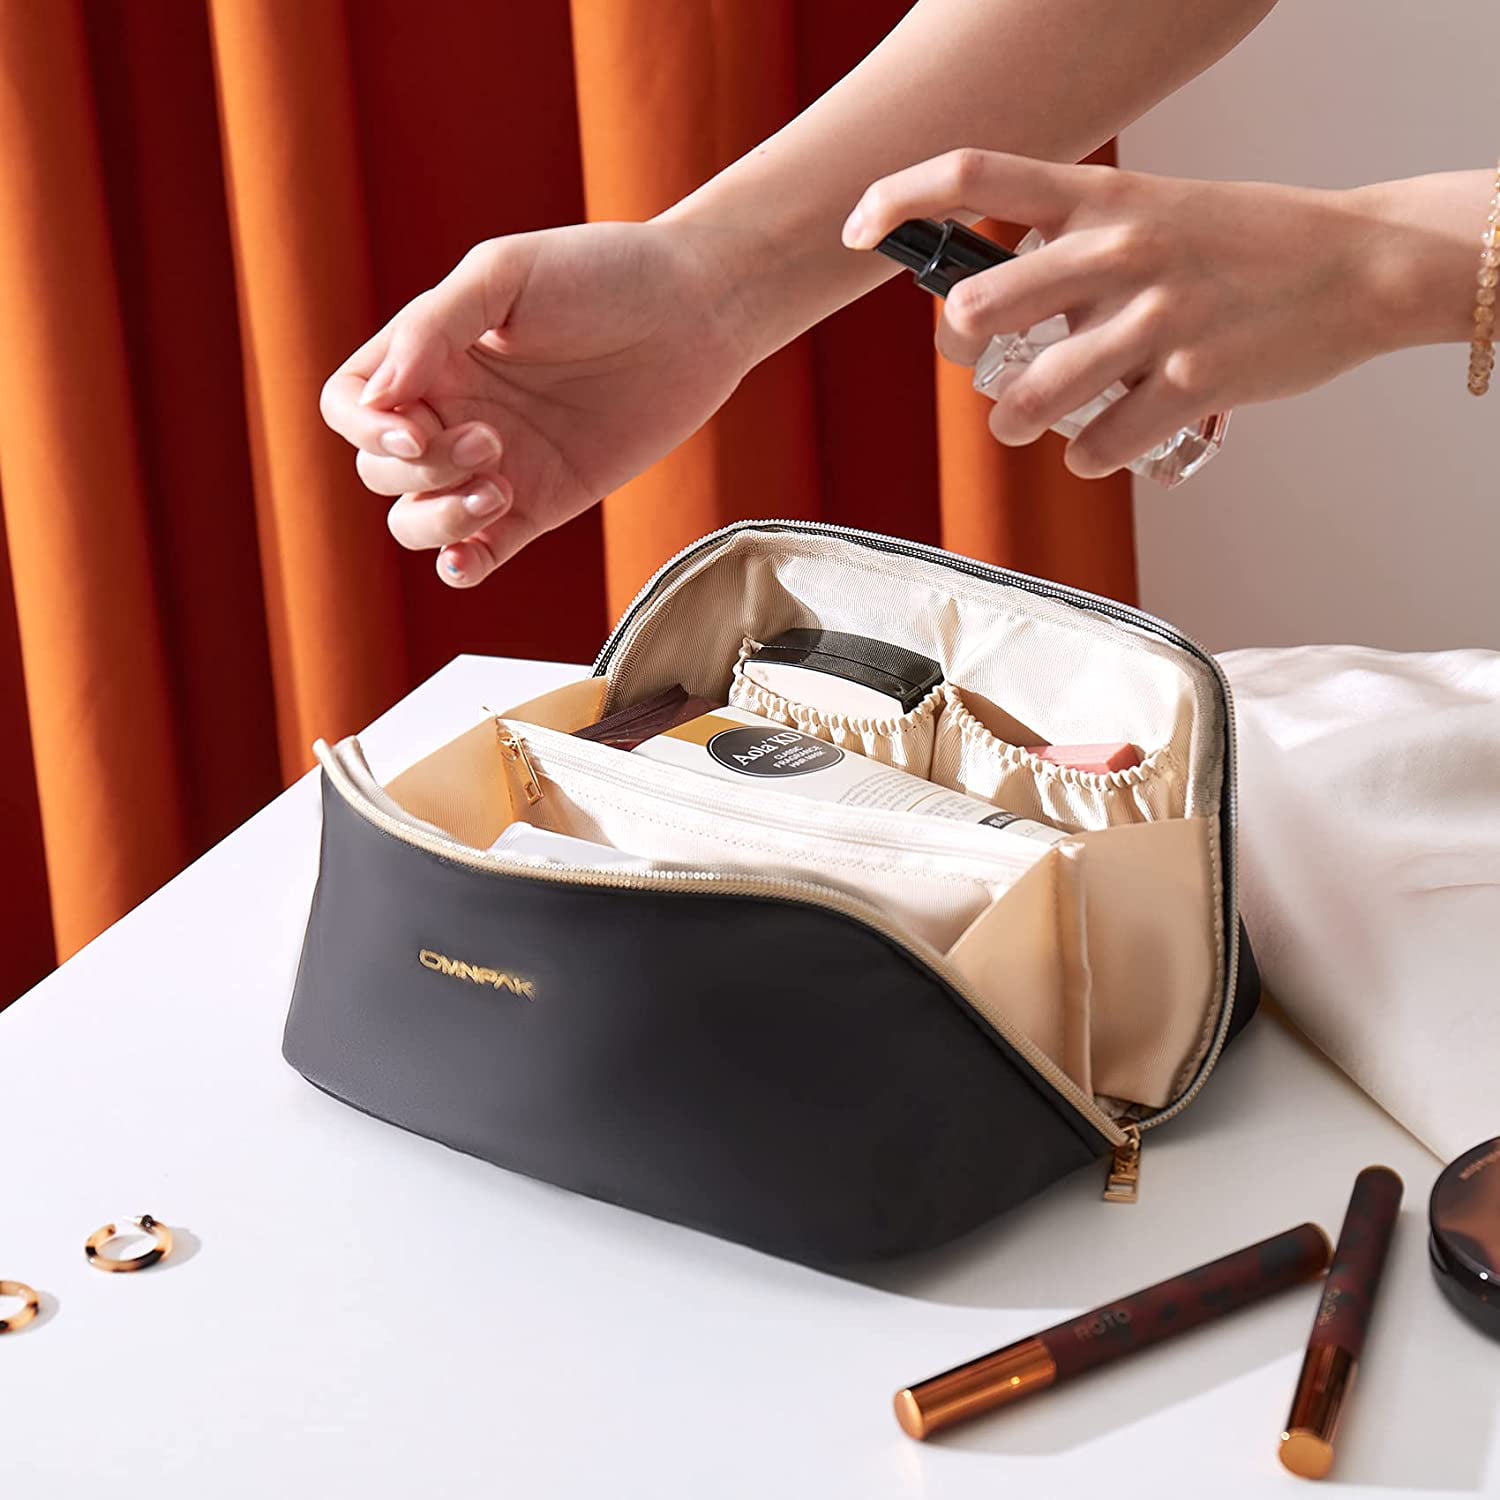 Large Capacity Travel Cosmetic Bag Travel Makeup Bag Opens 